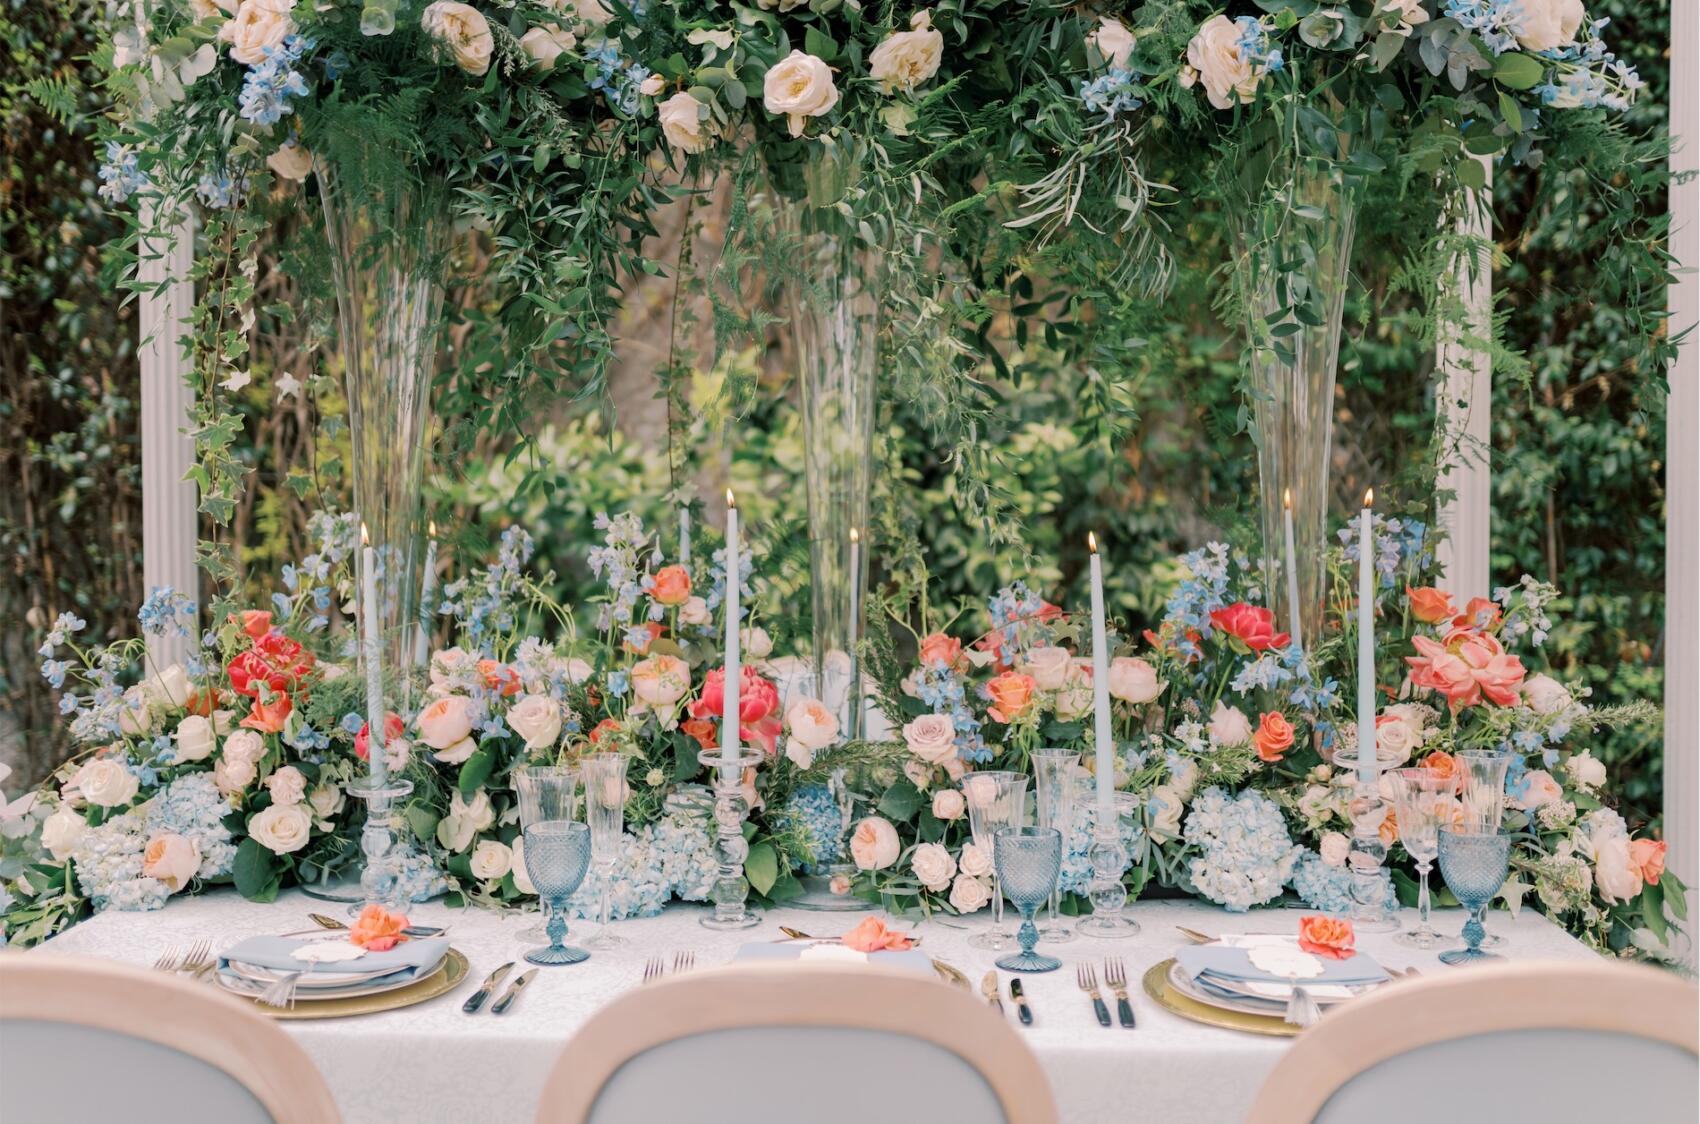 Pale blue glasses, candles, colourful floral wedding table decor. Westacott Weddings & Events